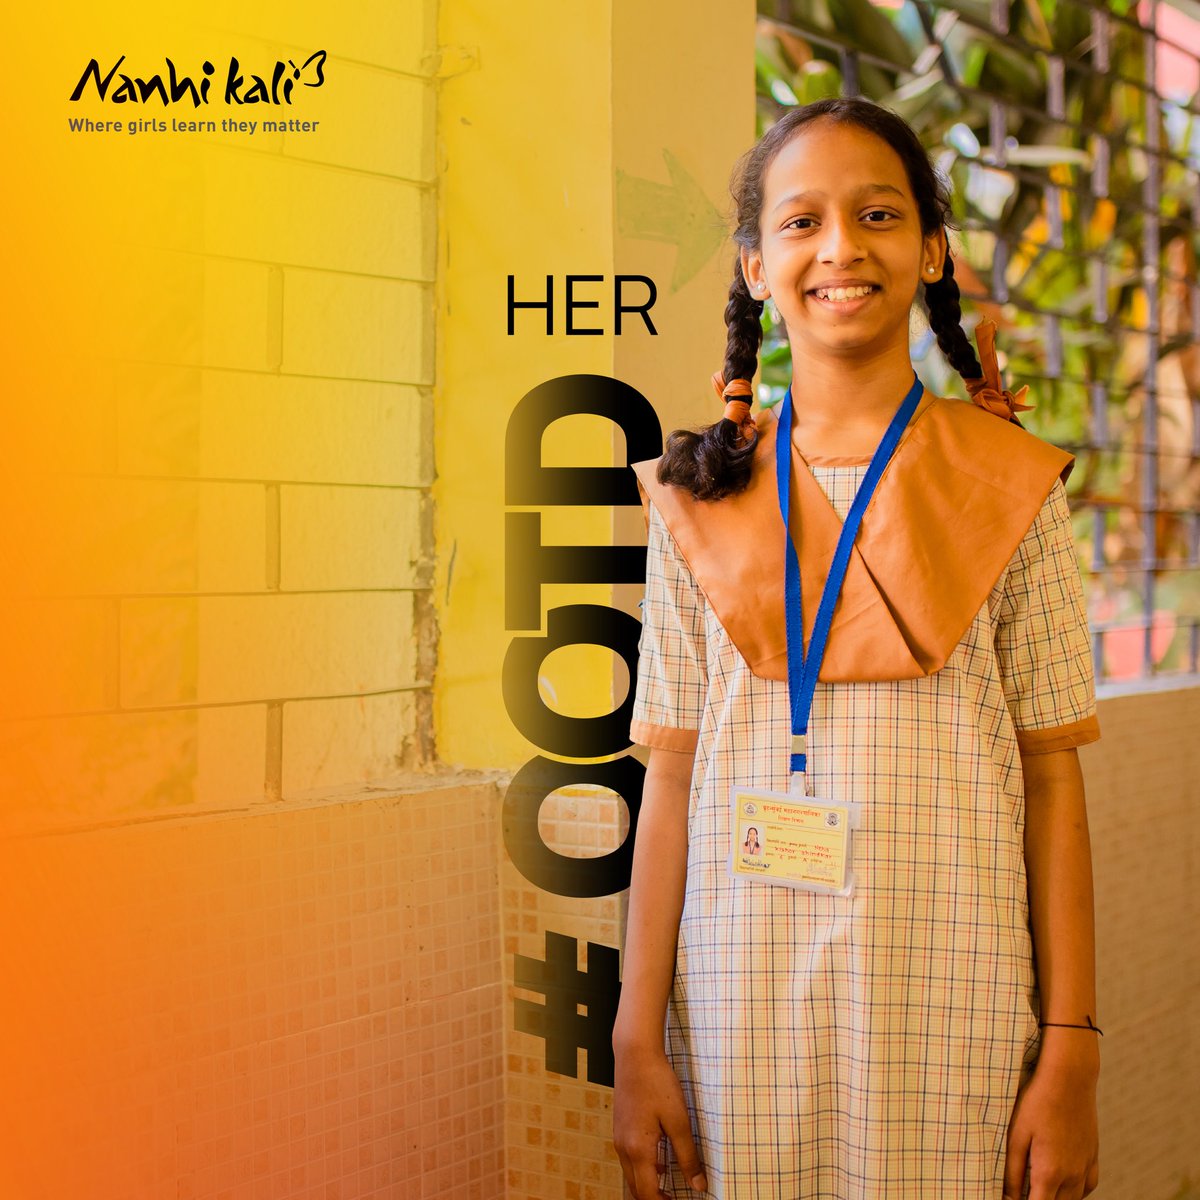 Your donation helps make the playing field ‘uniform’. Help support underprivileged girls in their educational journey, visit nanhikali.org   #NanhiKali #WhereGirlsLearnTheyMatter #EveryGirlMatters